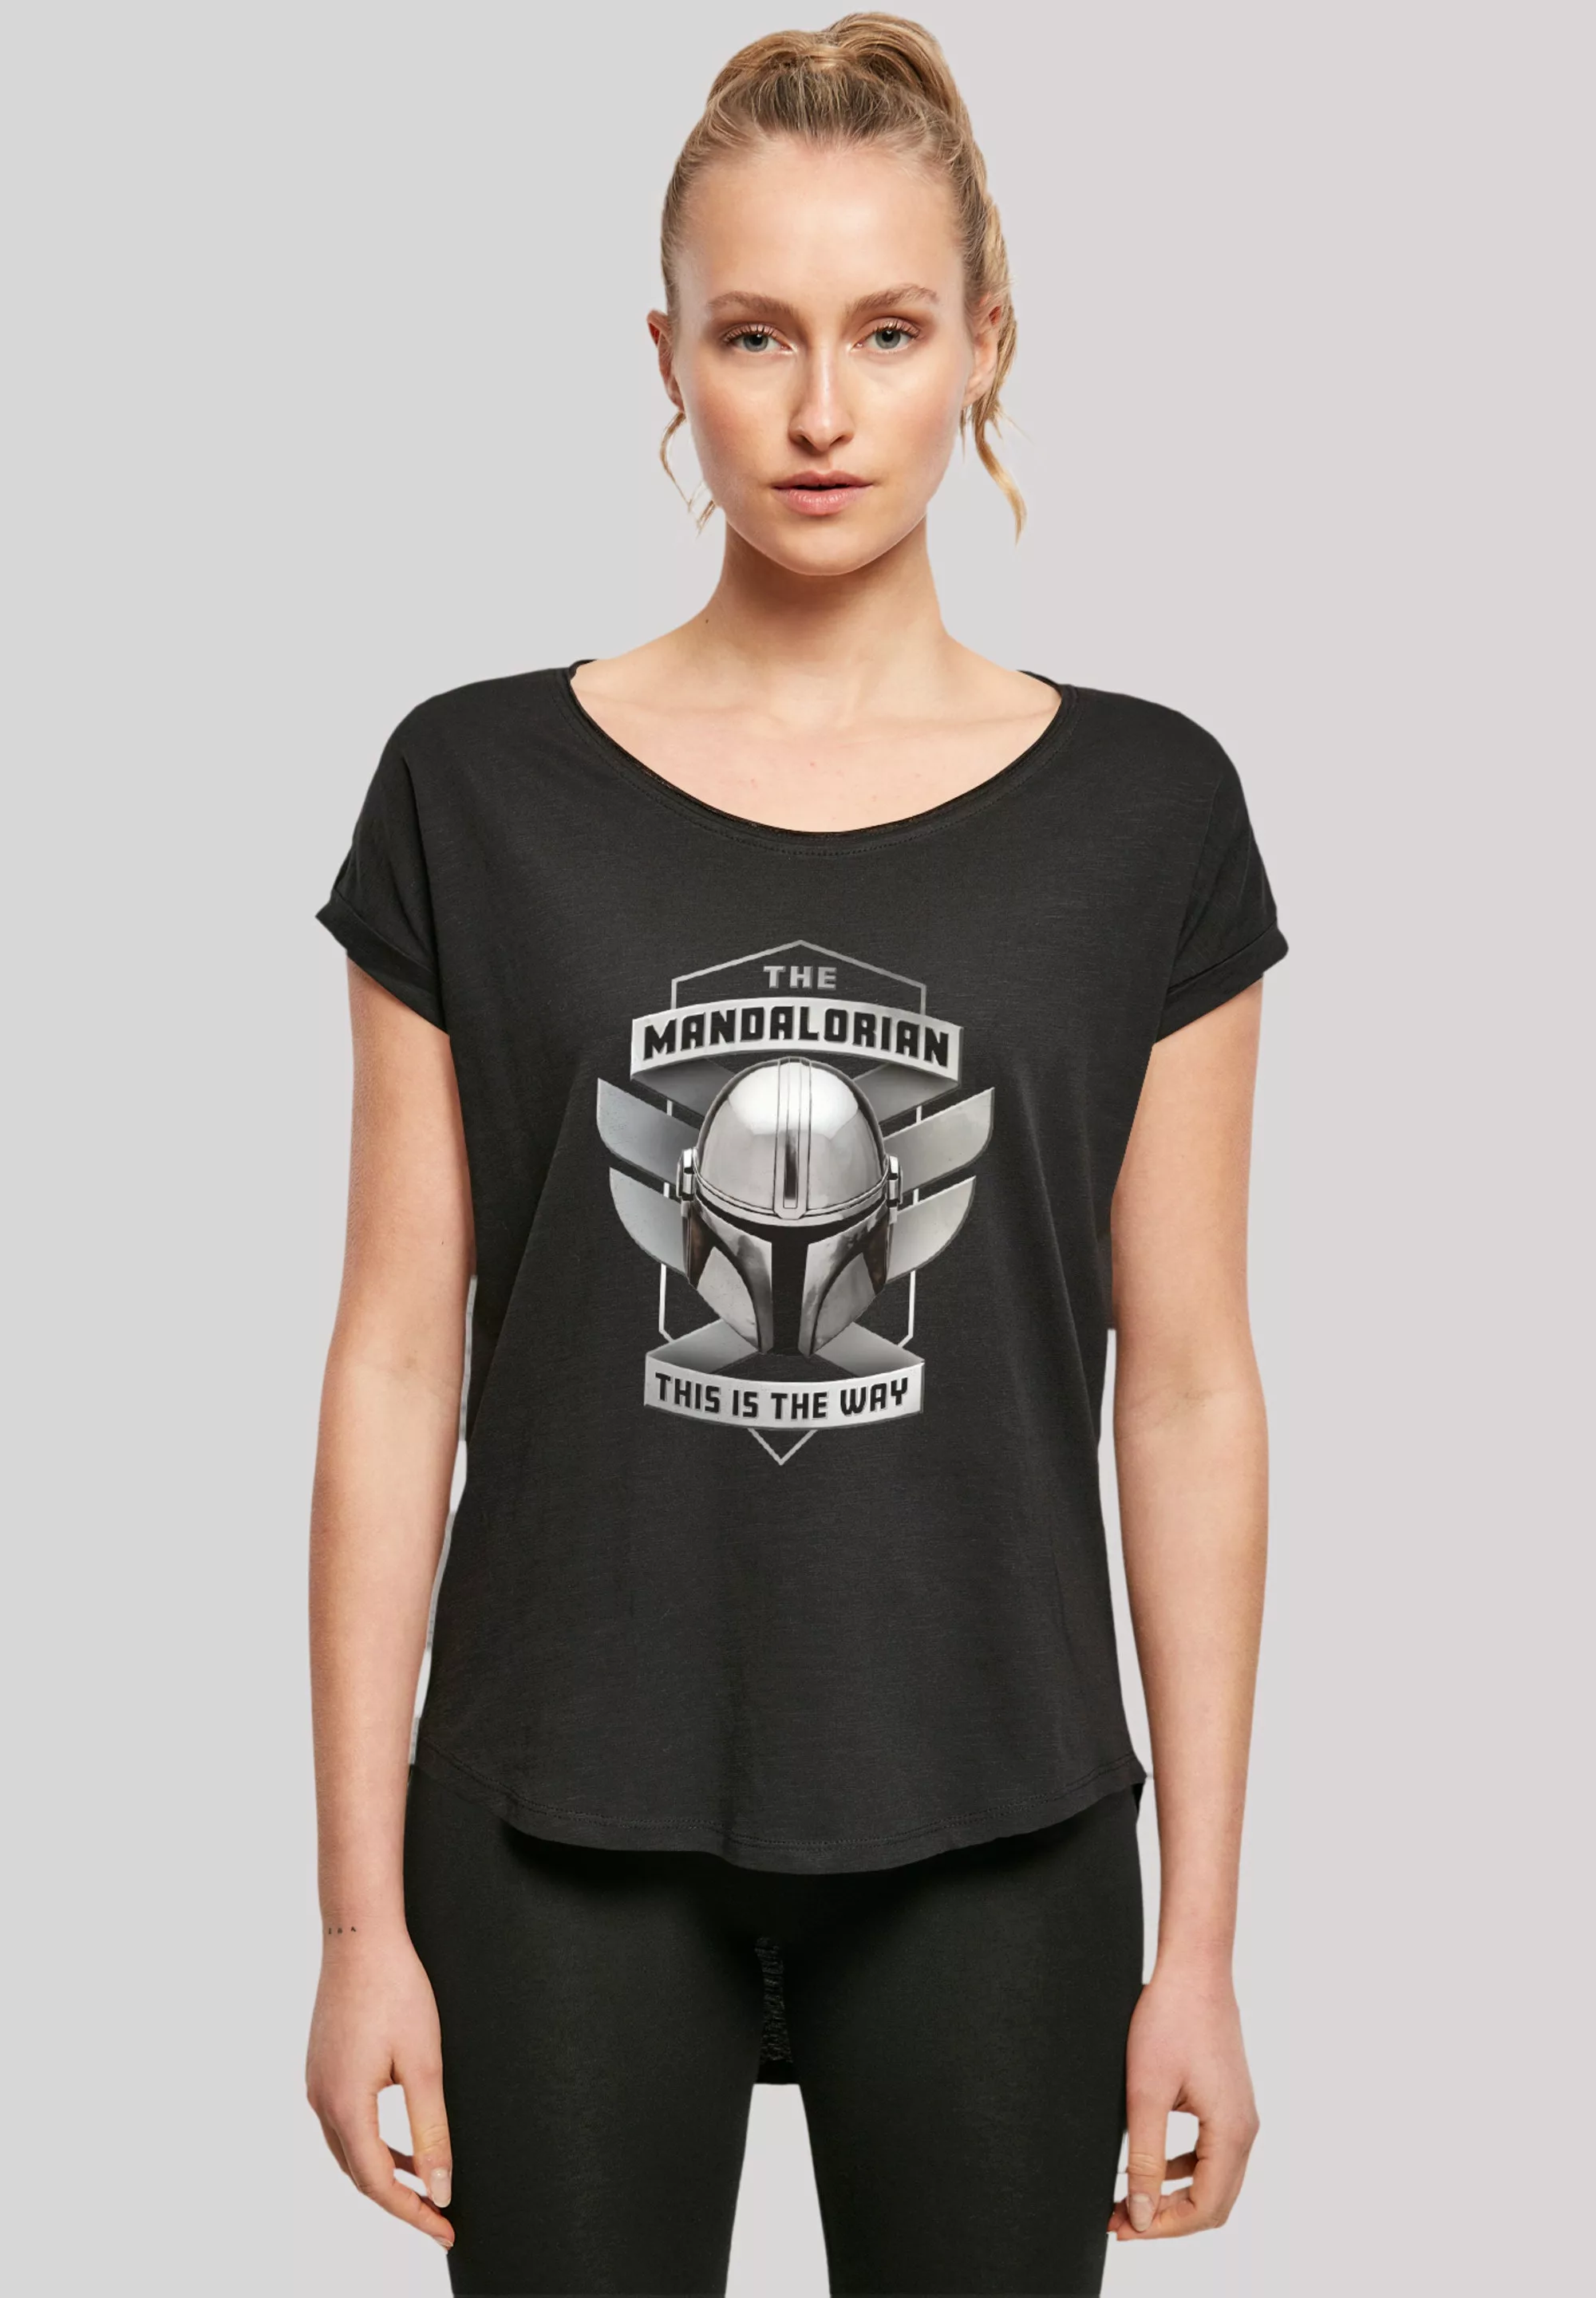 F4NT4STIC T-Shirt "Star Wars The Mandalorian This Is The Way", Premium Qual günstig online kaufen